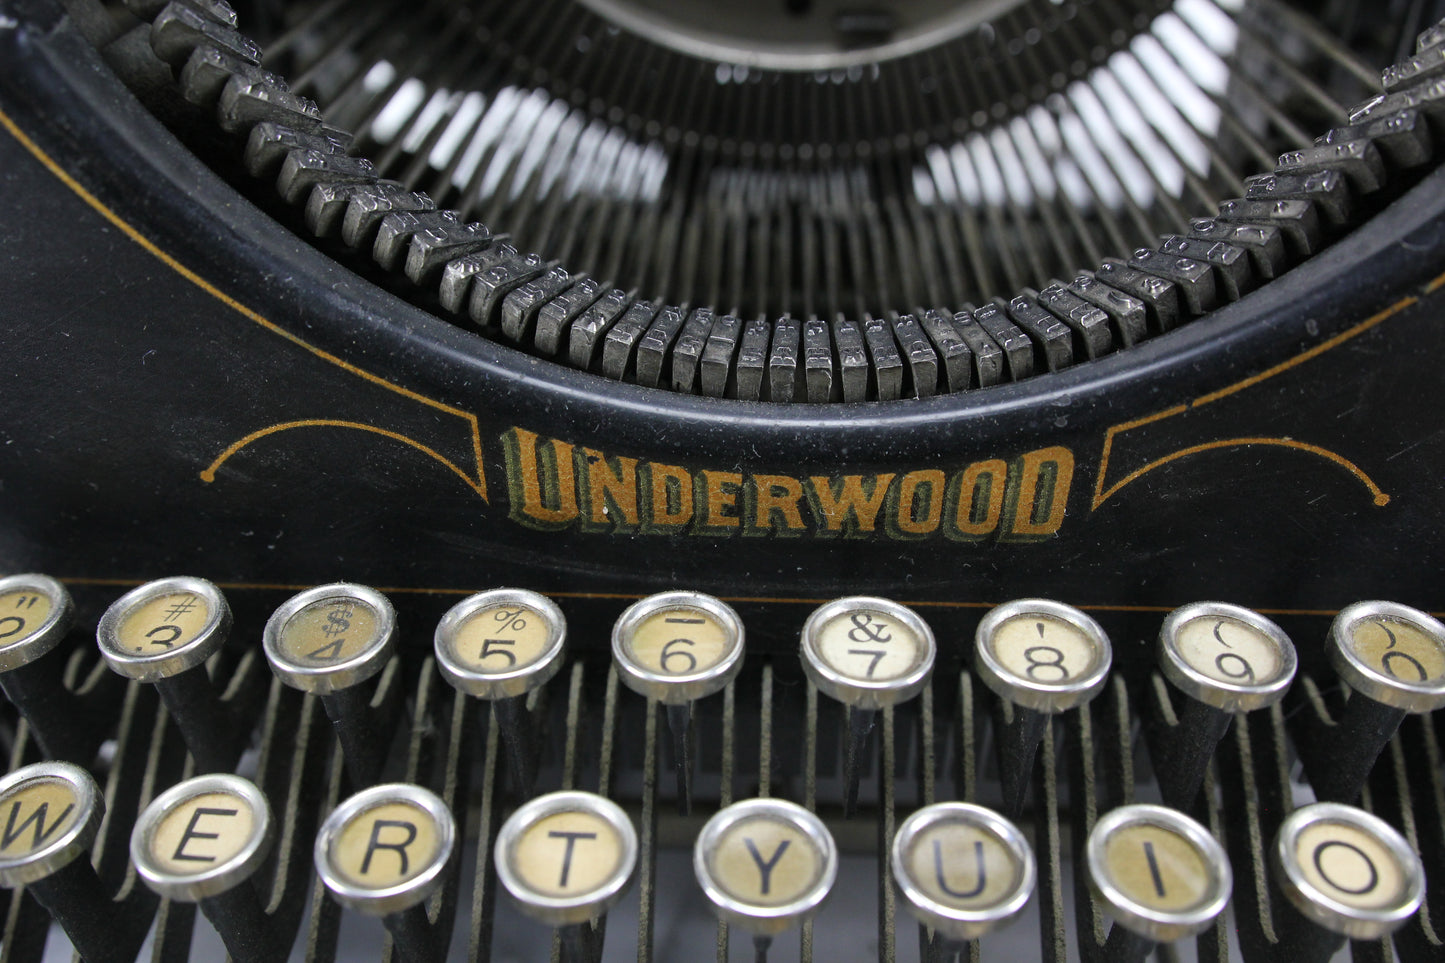 Underwood Standard Typewriter No. 3, 11-Inch Model, Made in USA, 1926